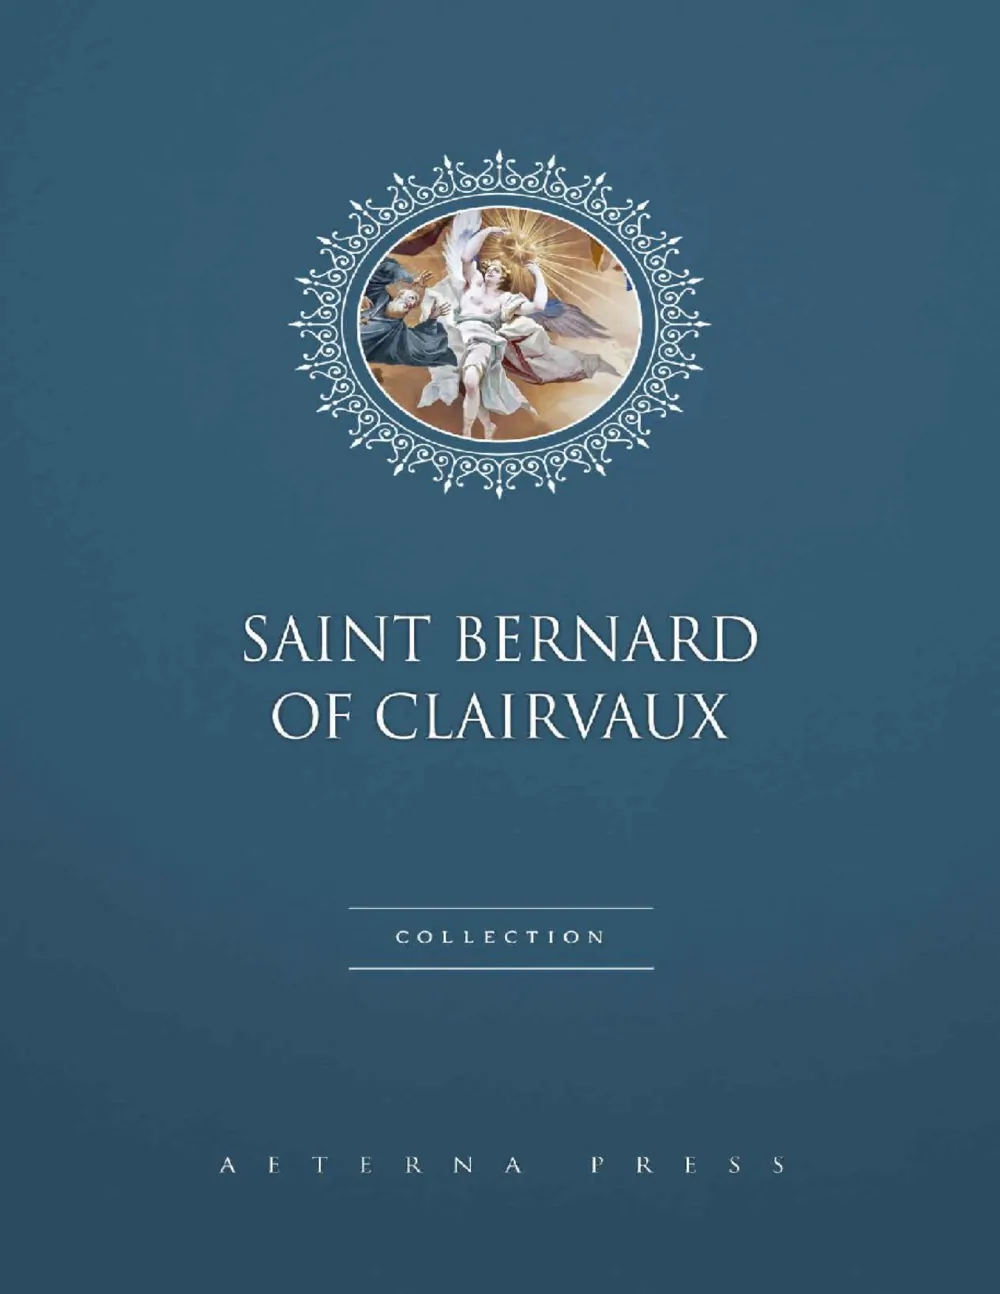 Saint Bernard of Clairvaux Collection